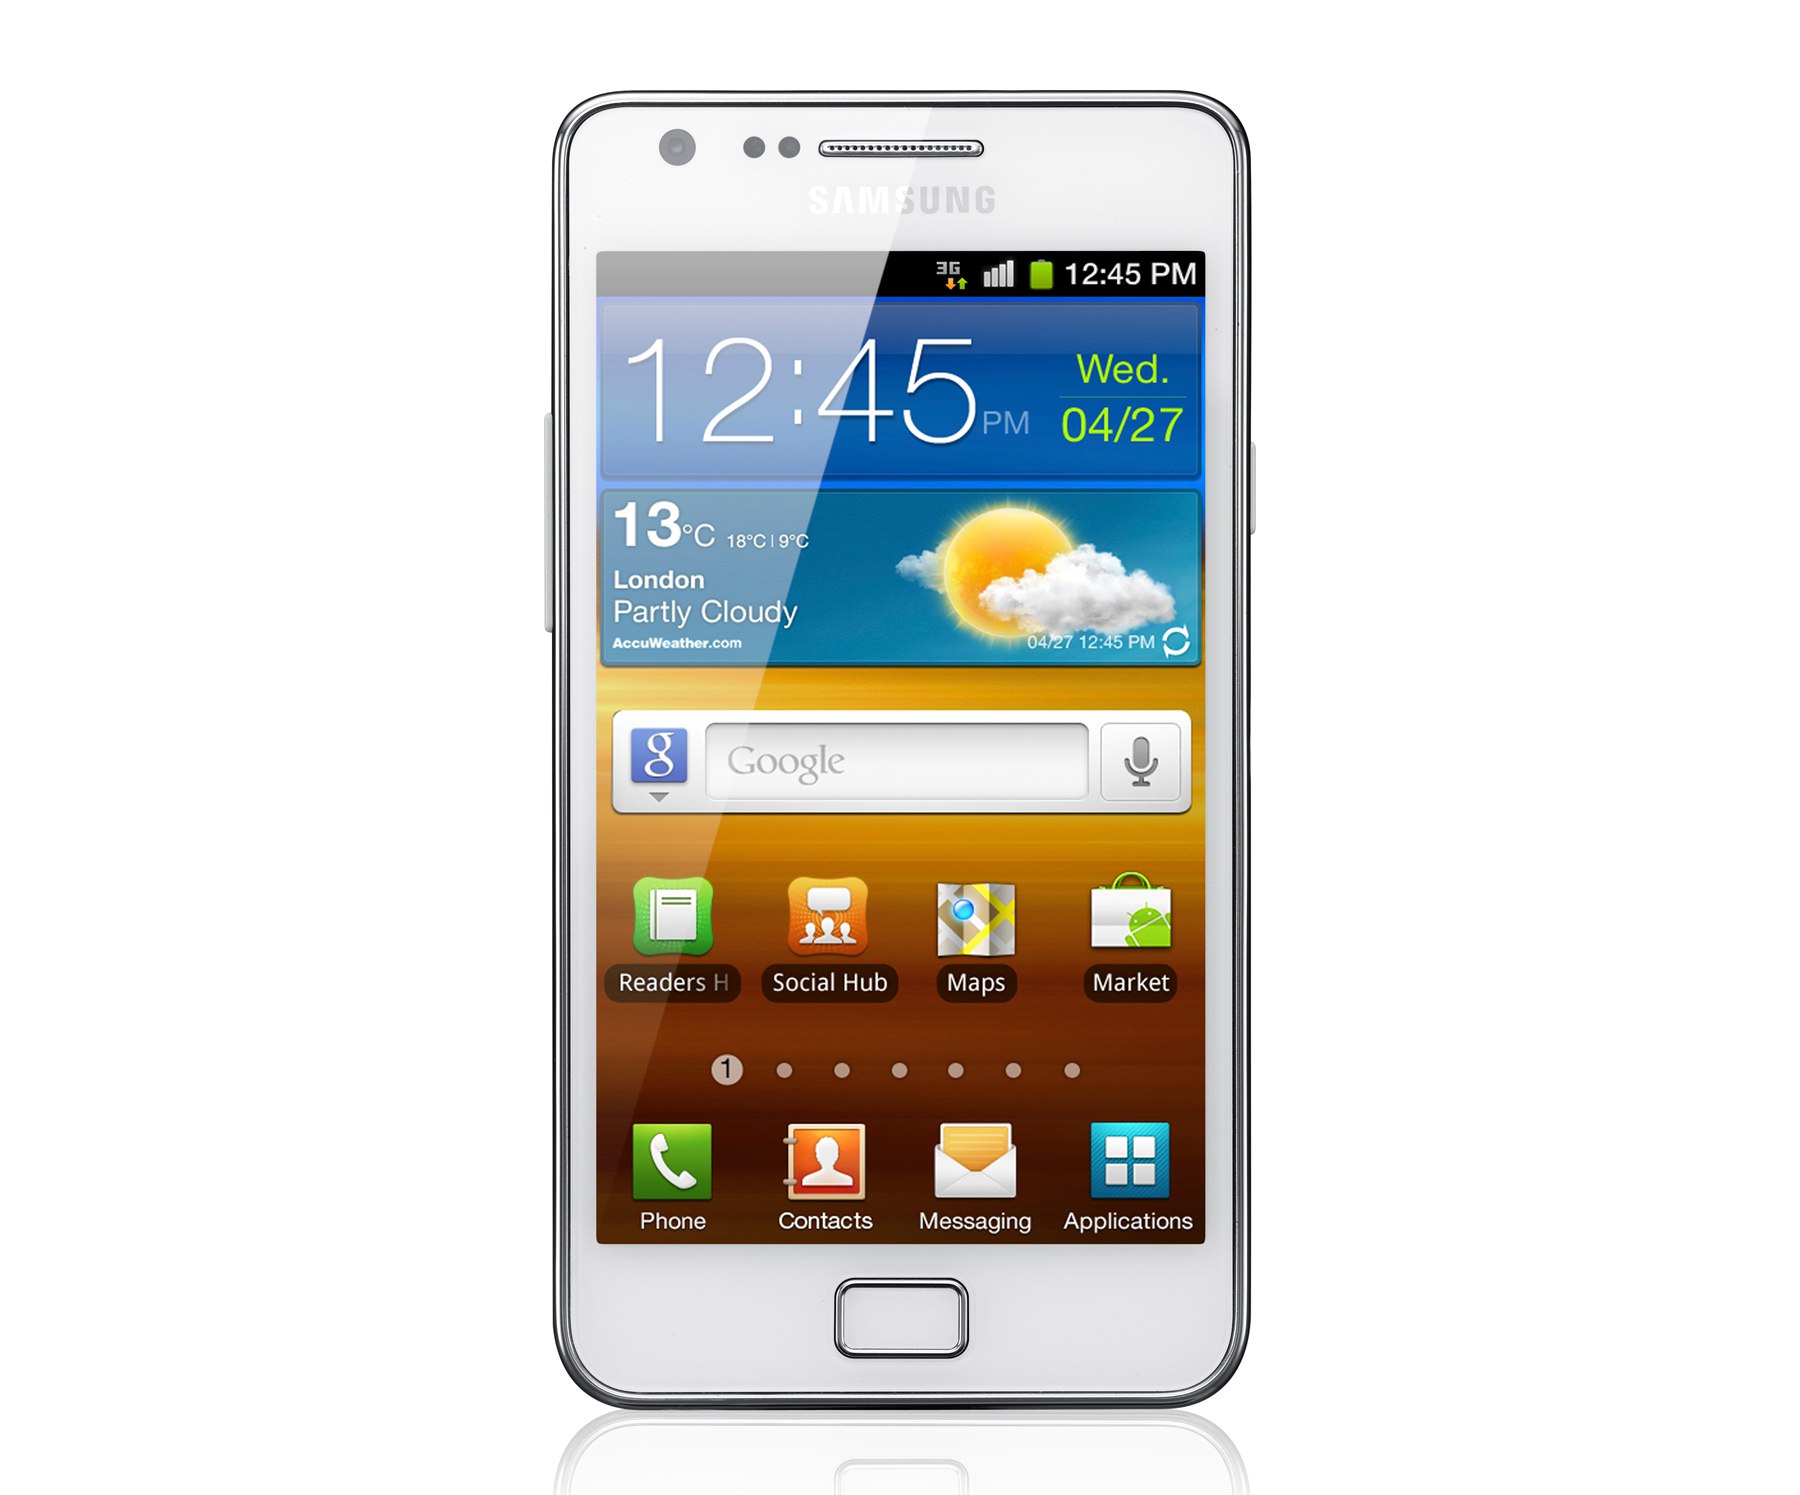 How to Flash a Custom ROM on the Samsung Galaxy S2 (International)